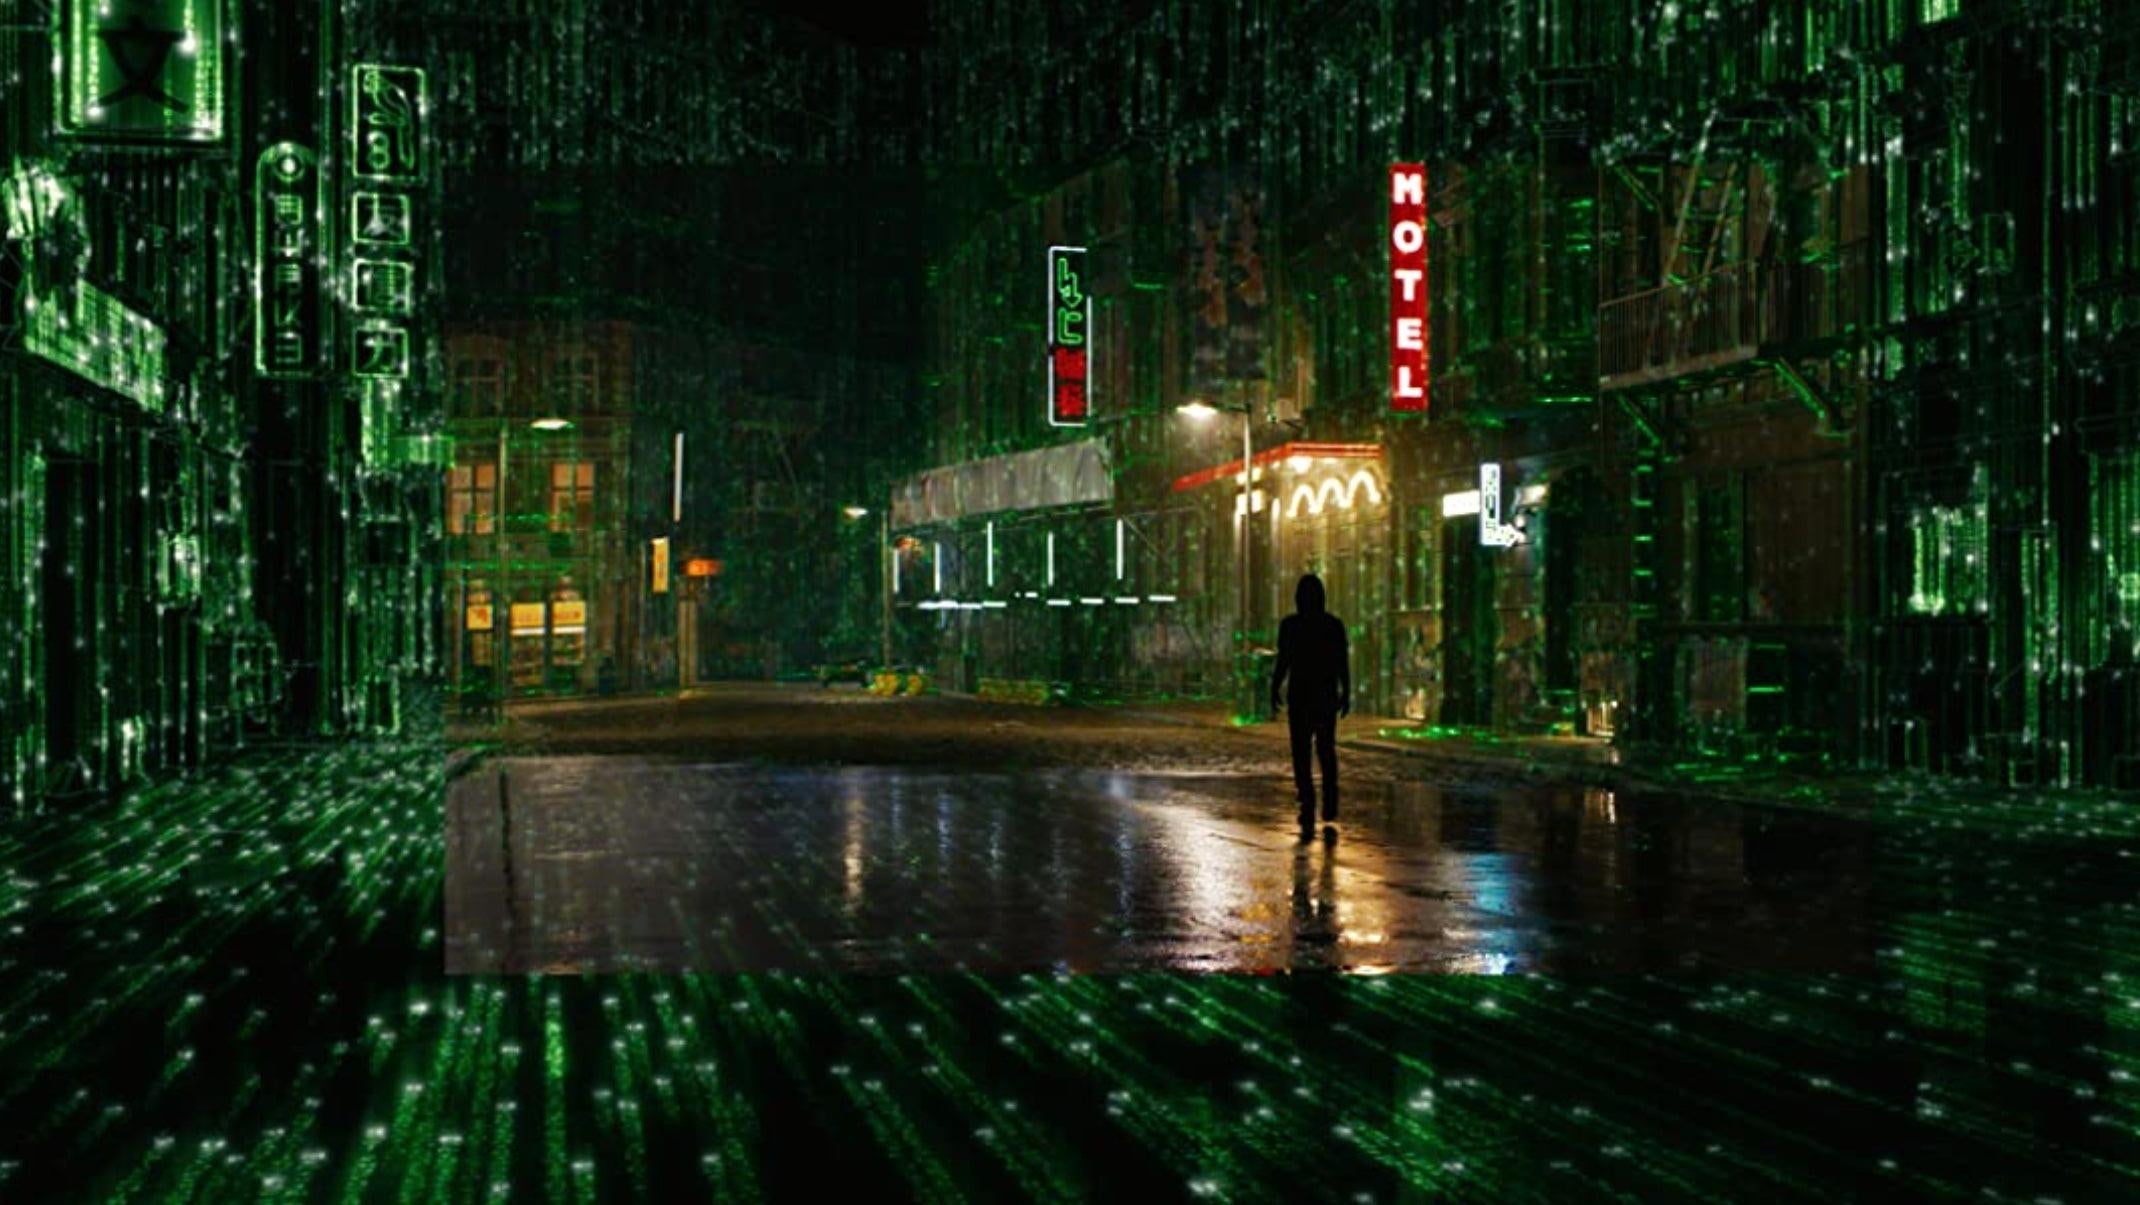 We're walking into The Matrix (Image: Warner Bros.)